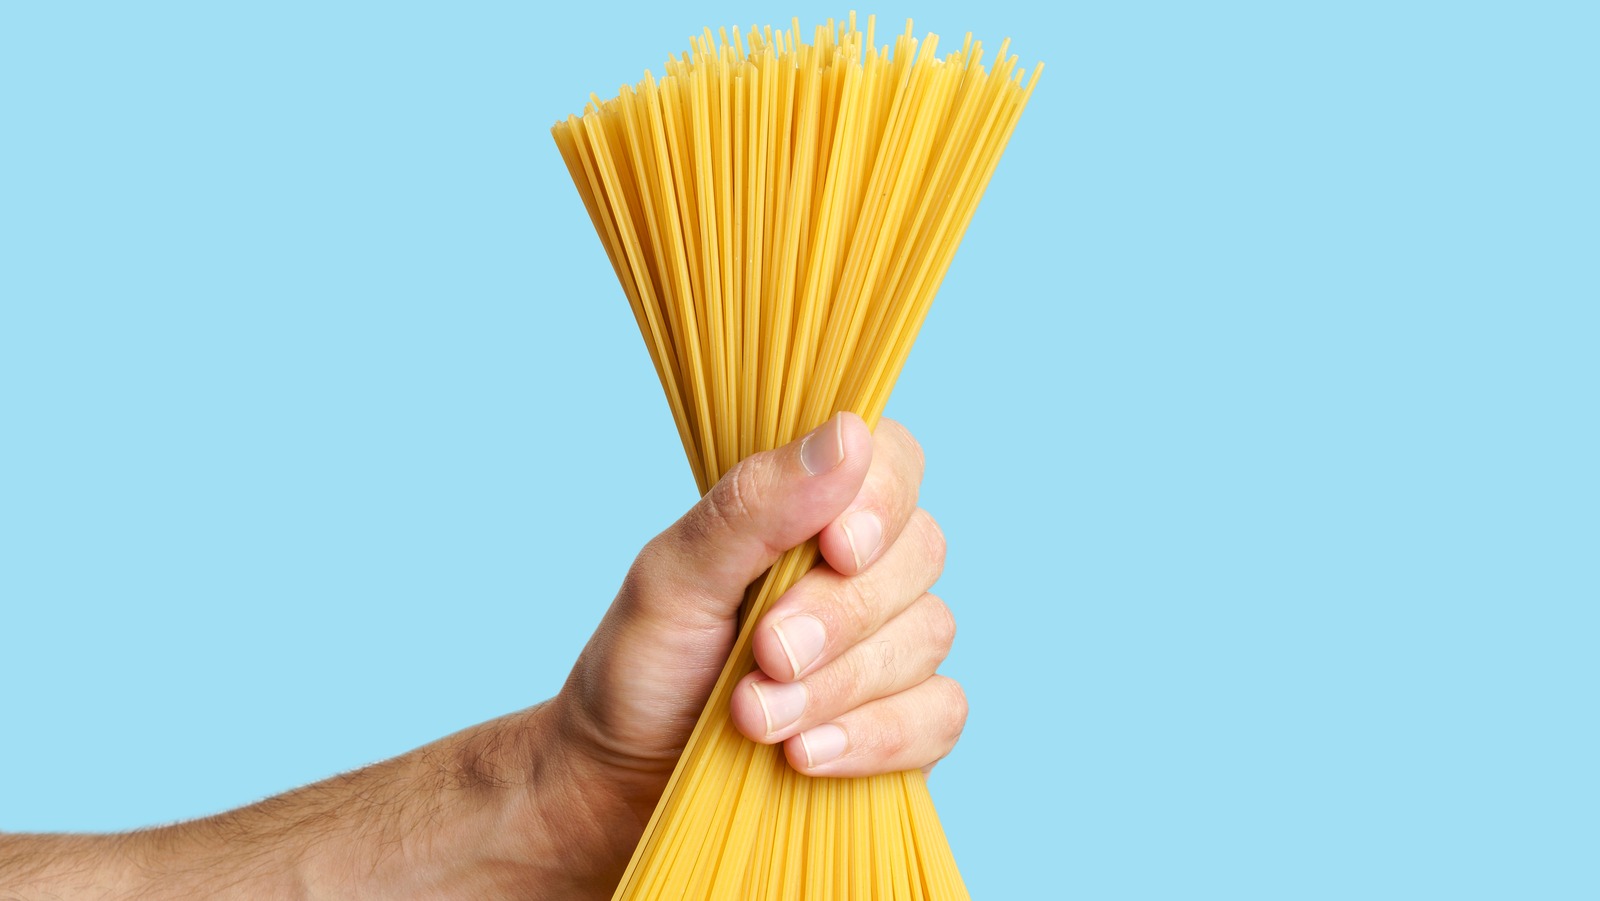 Buy Spaghetti Pasta